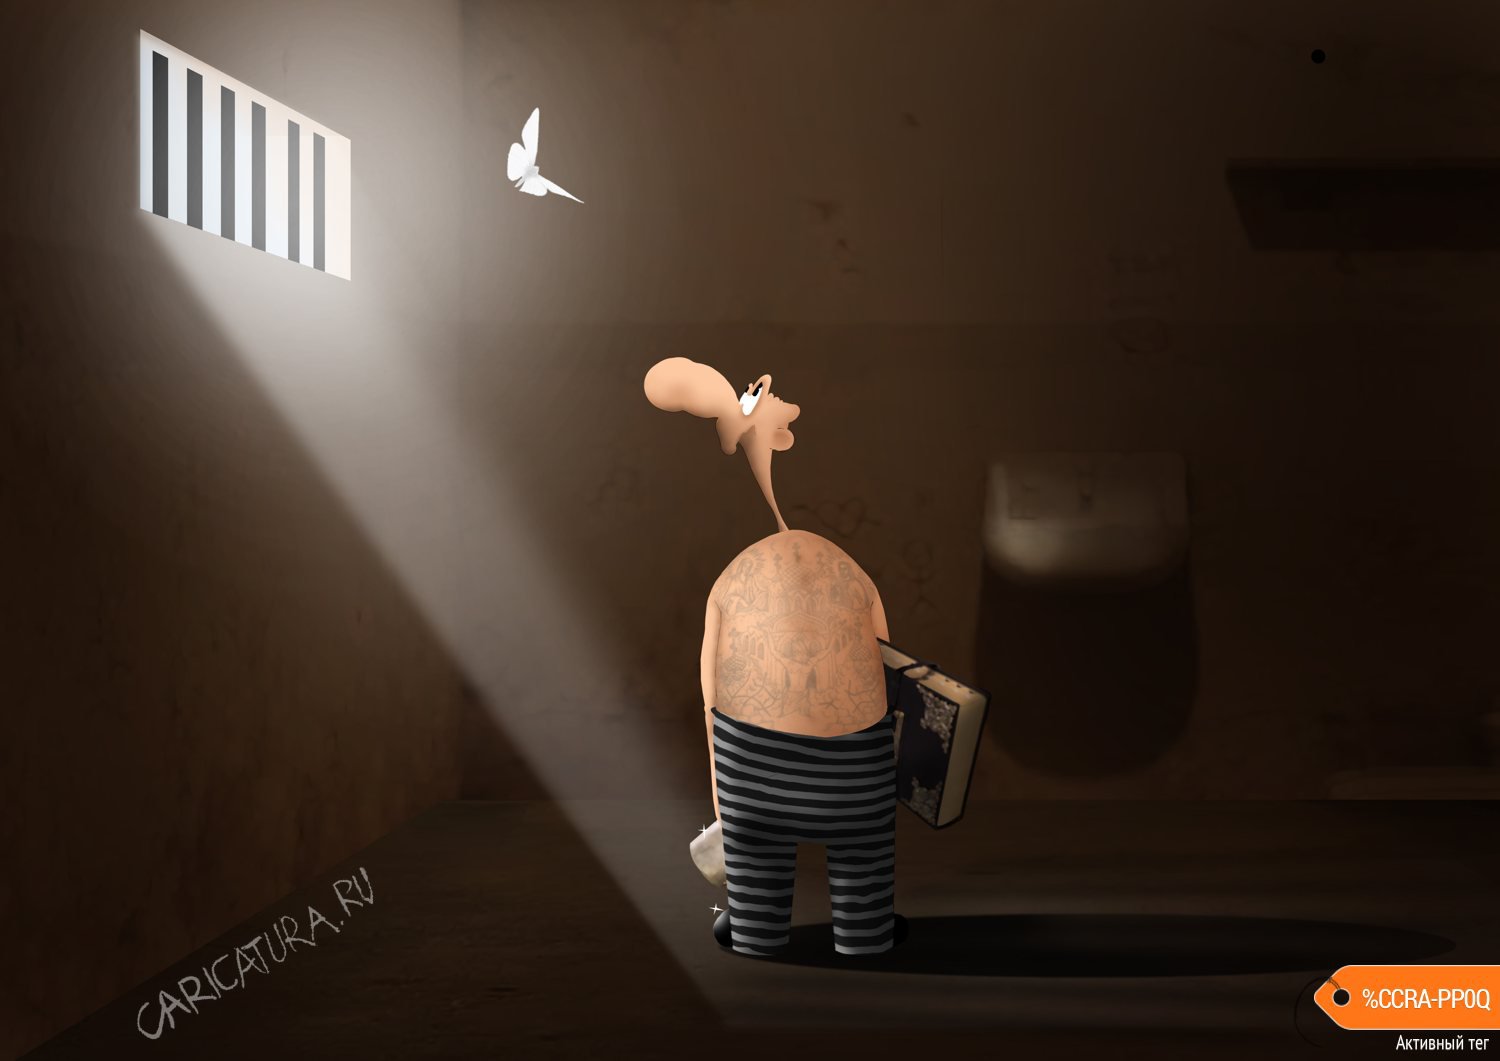 Карикатура "Тюрьма", Николай Куприченко